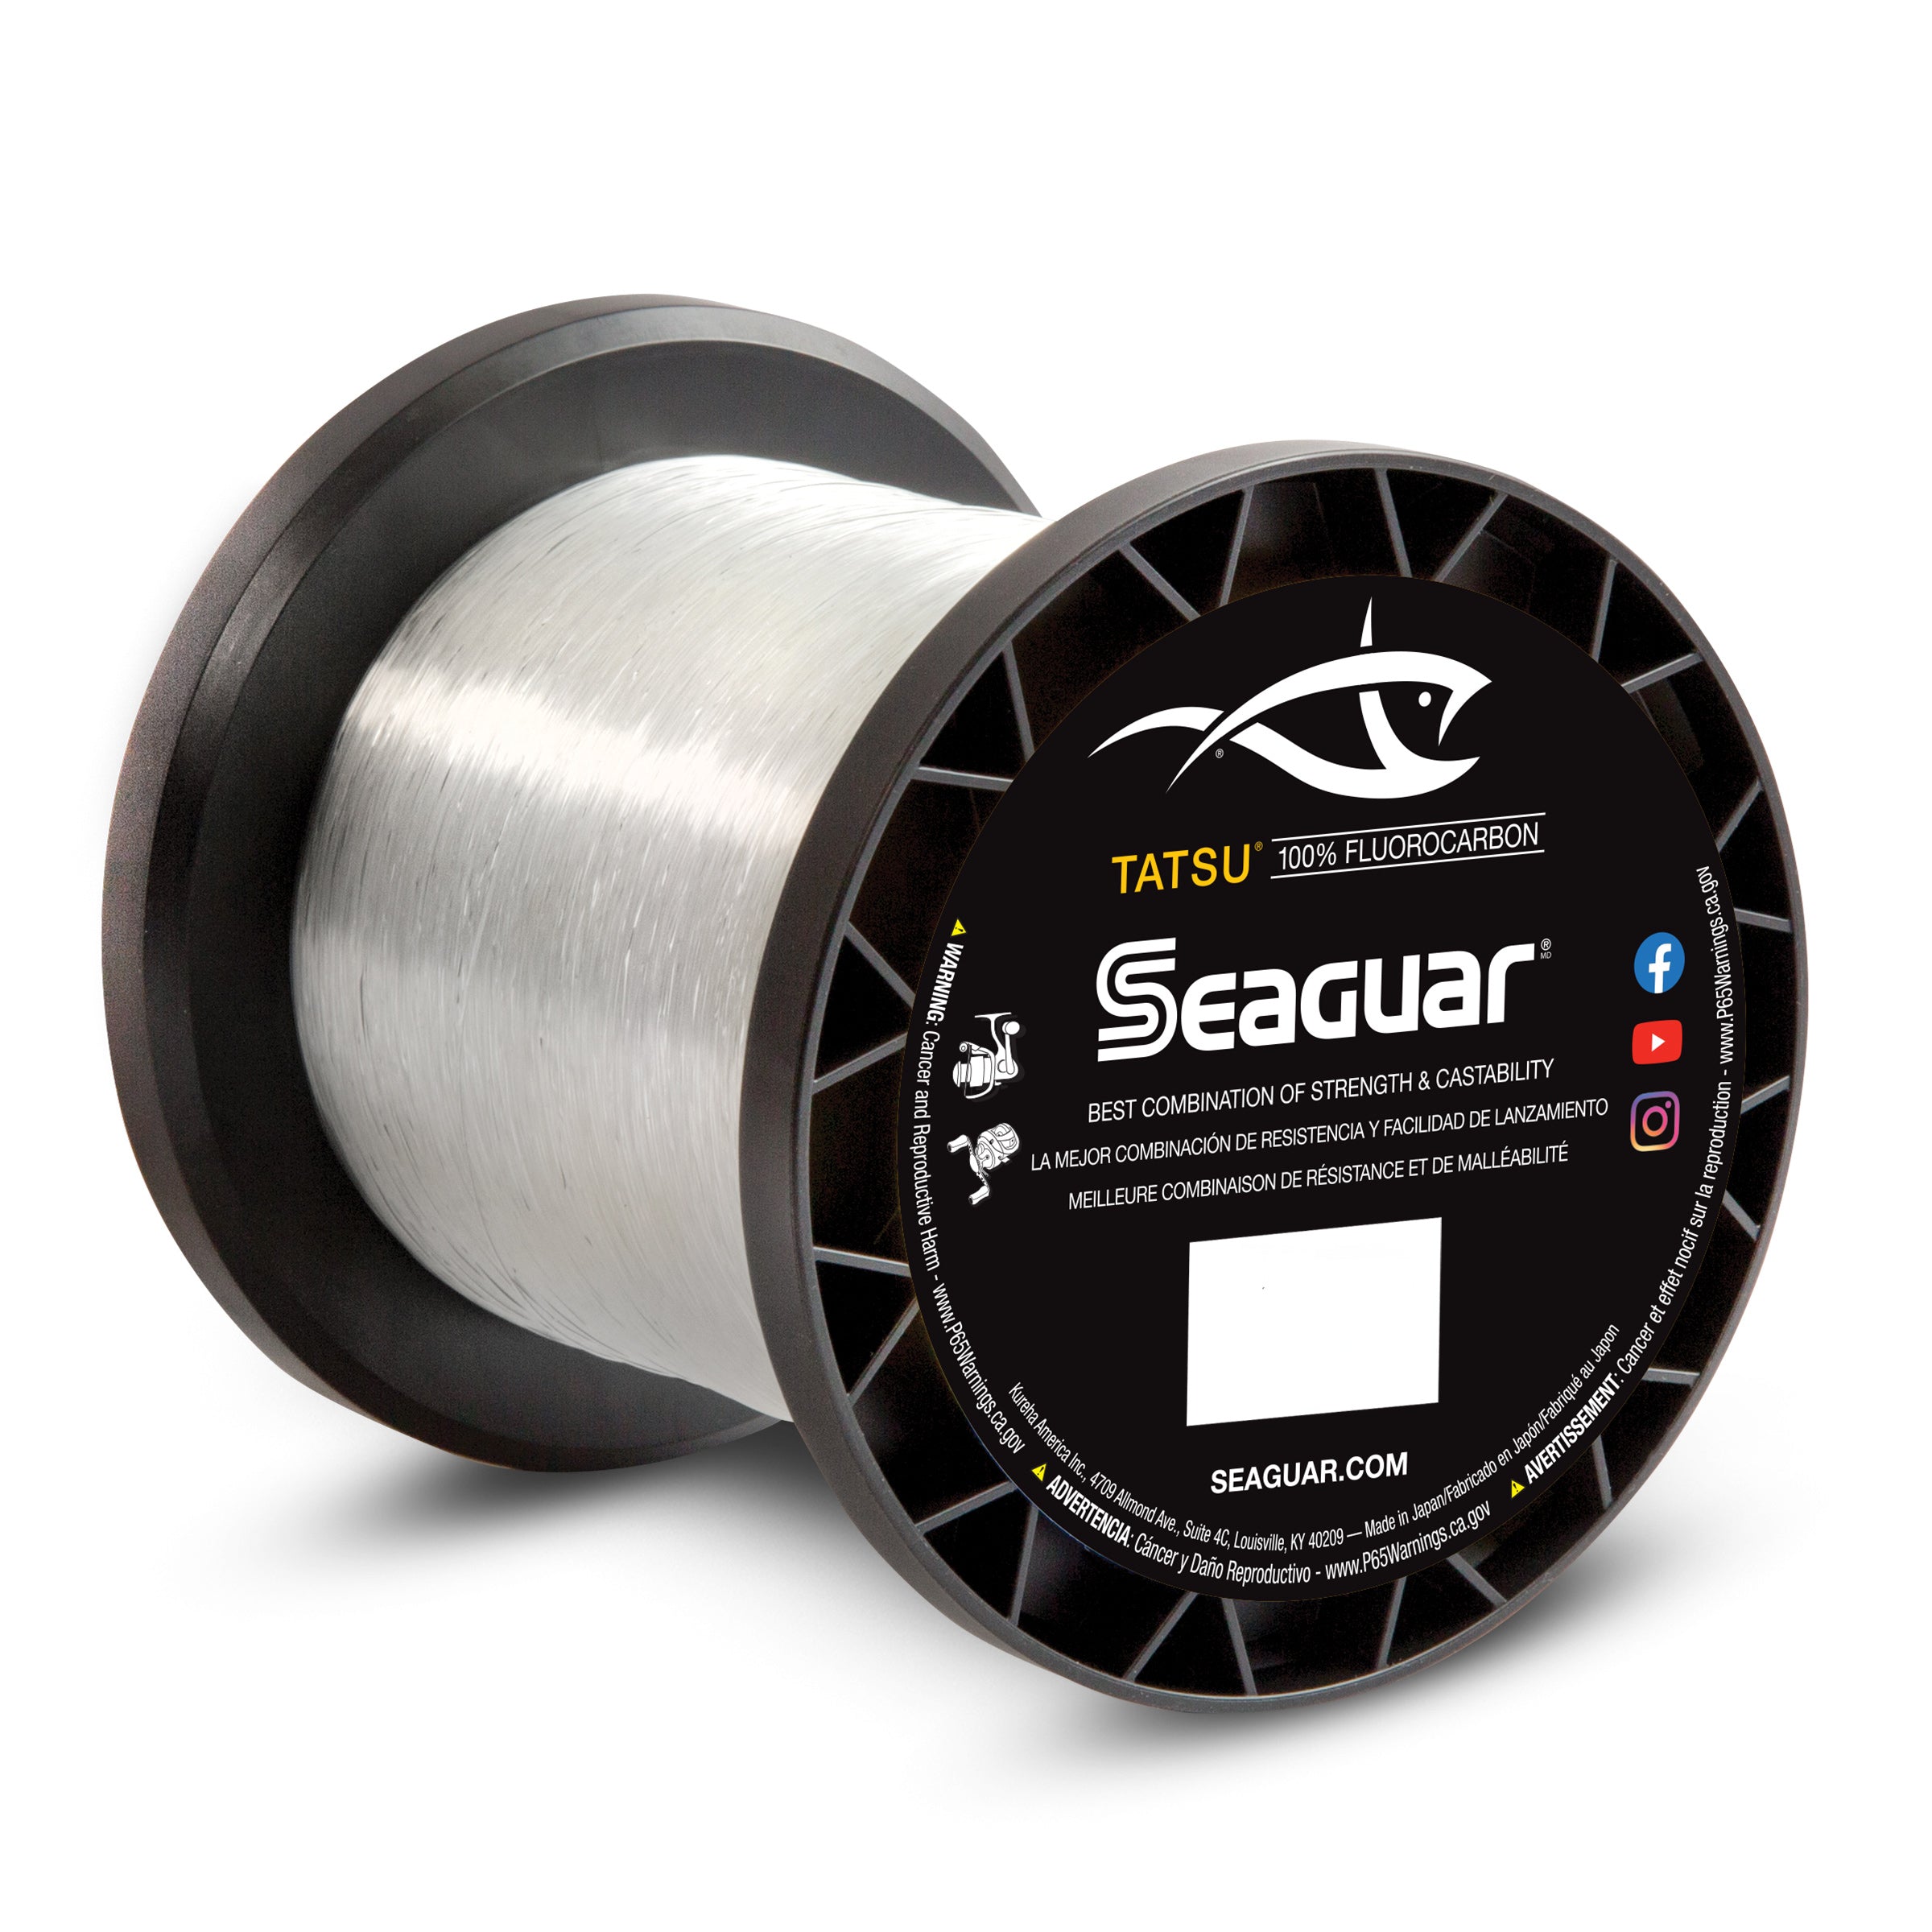 Seaguar Tatsu Fluorocarbon Line 183m/200yds 6lb-15lb Coating Fishing Line  Hot Sale Nylon Carbon Saltwater Fishing Line - Fishing Lines - AliExpress